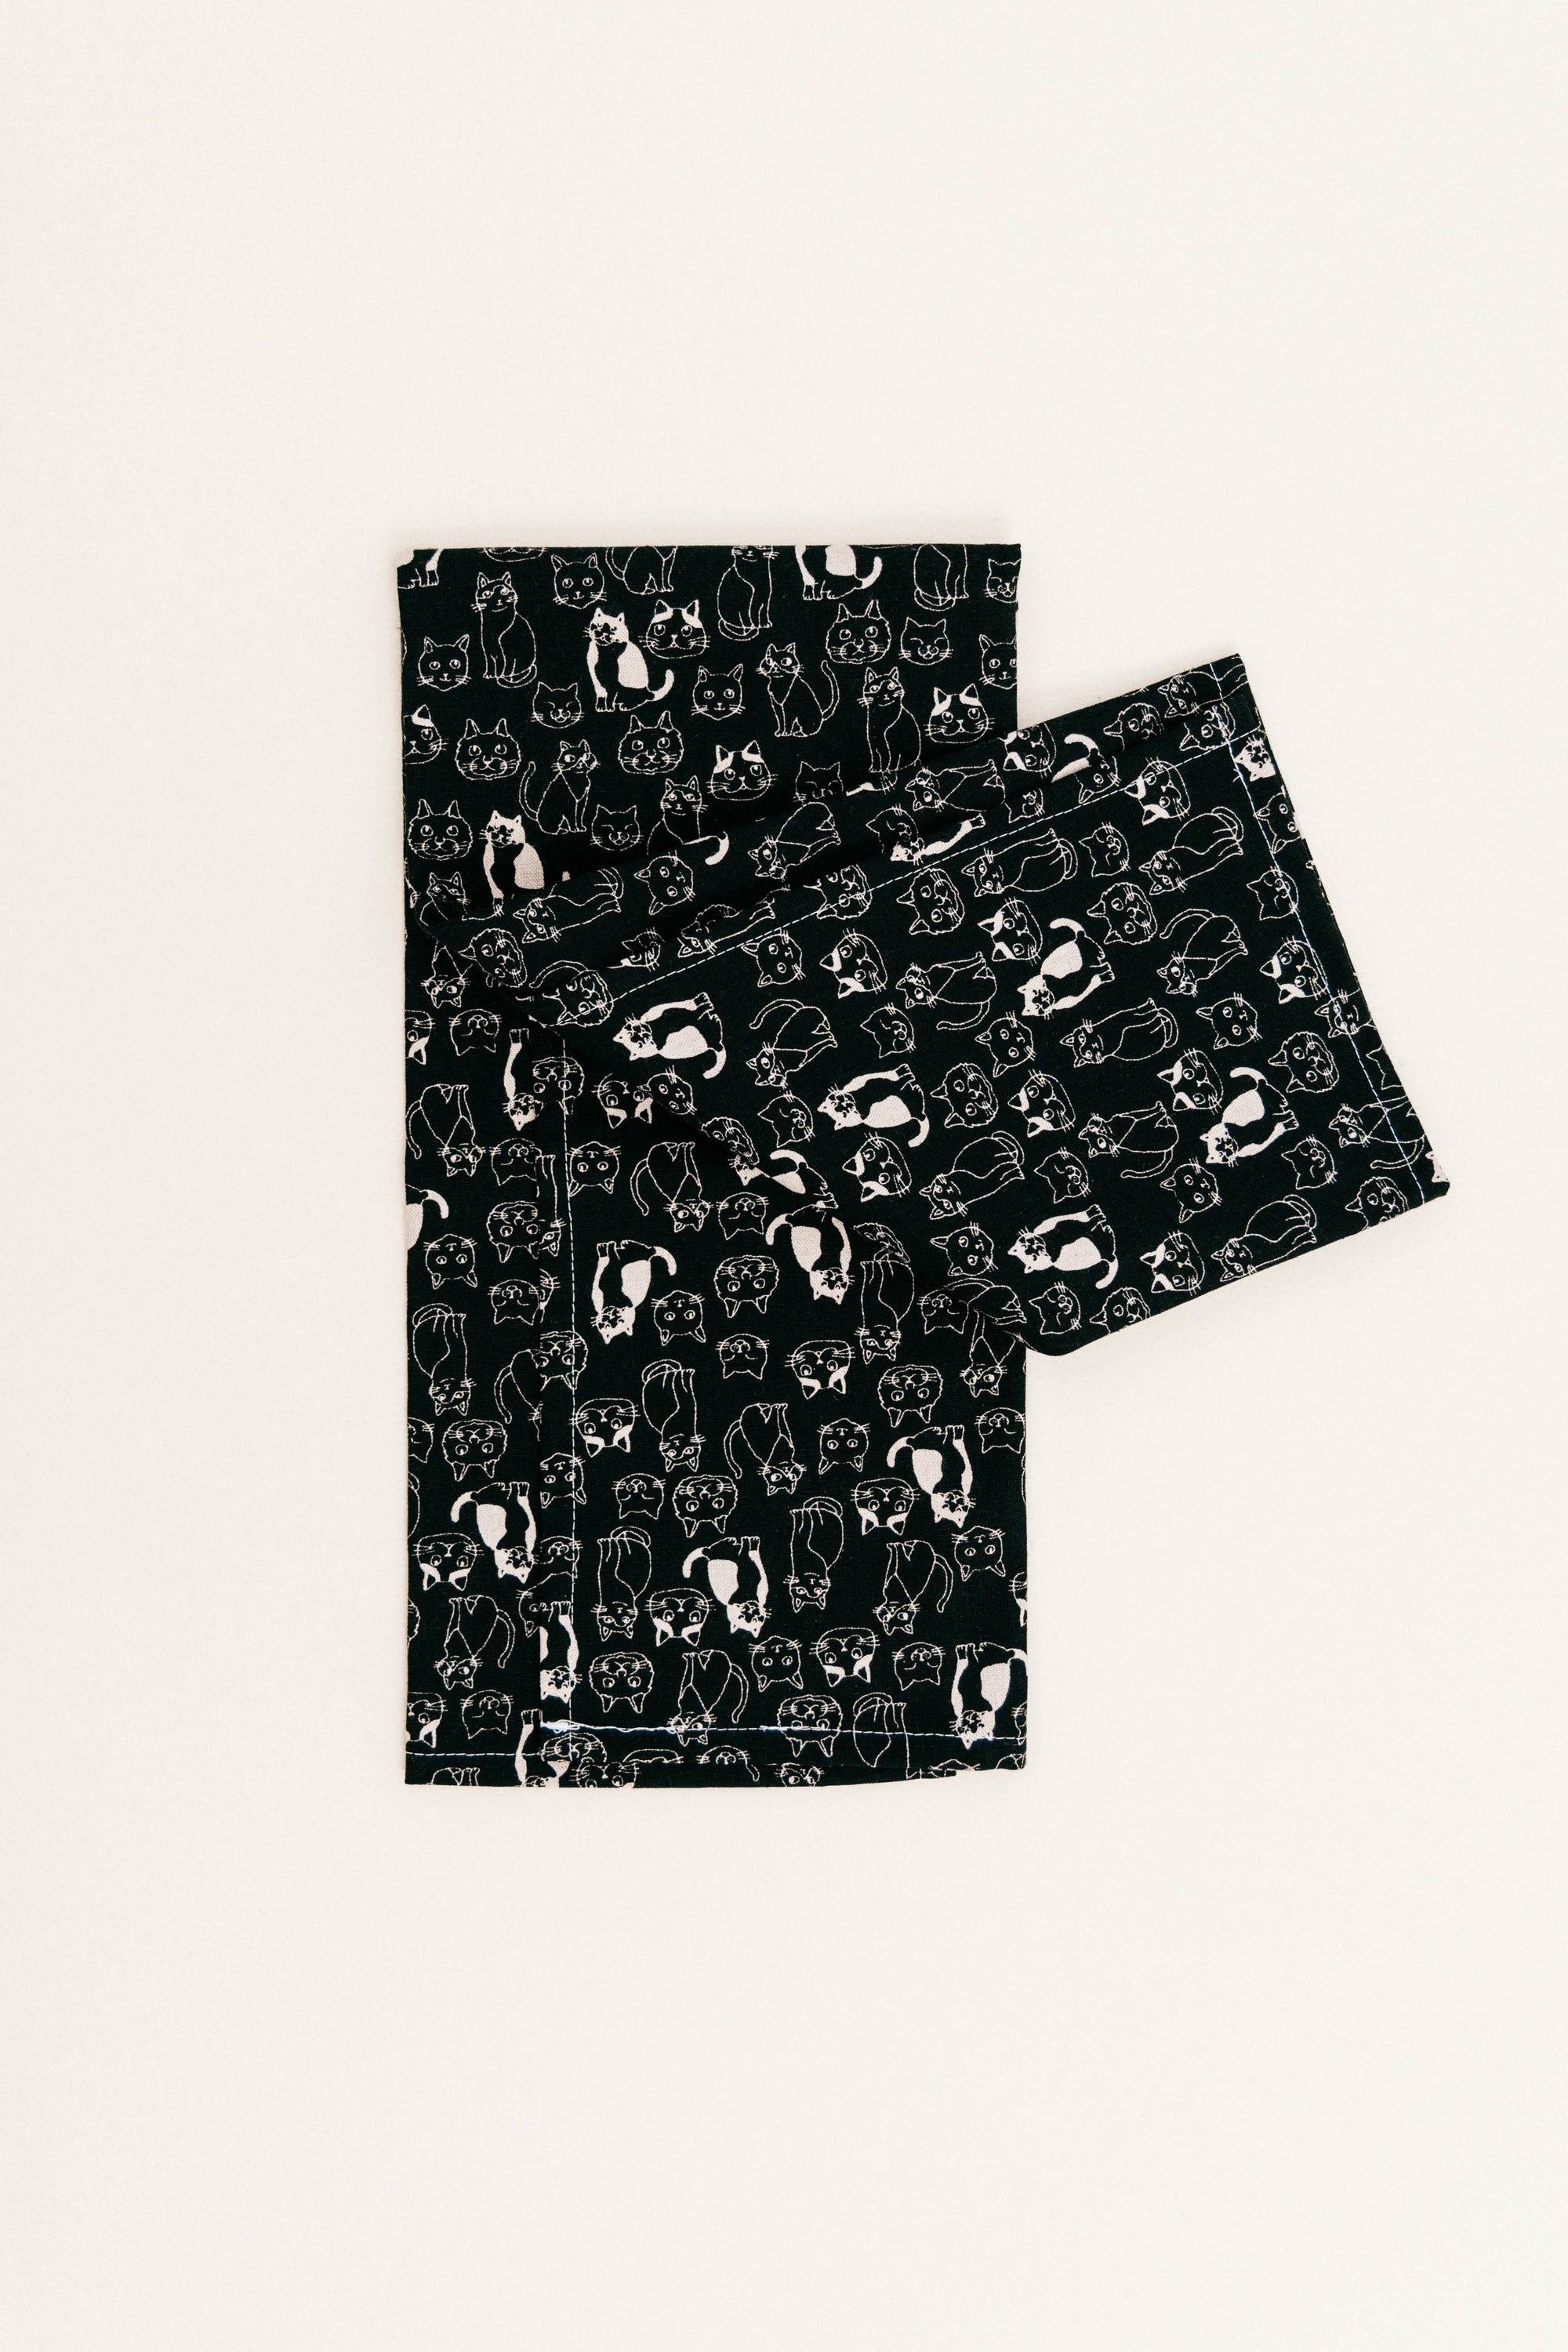 Modern Print Dish Towel Black Cats